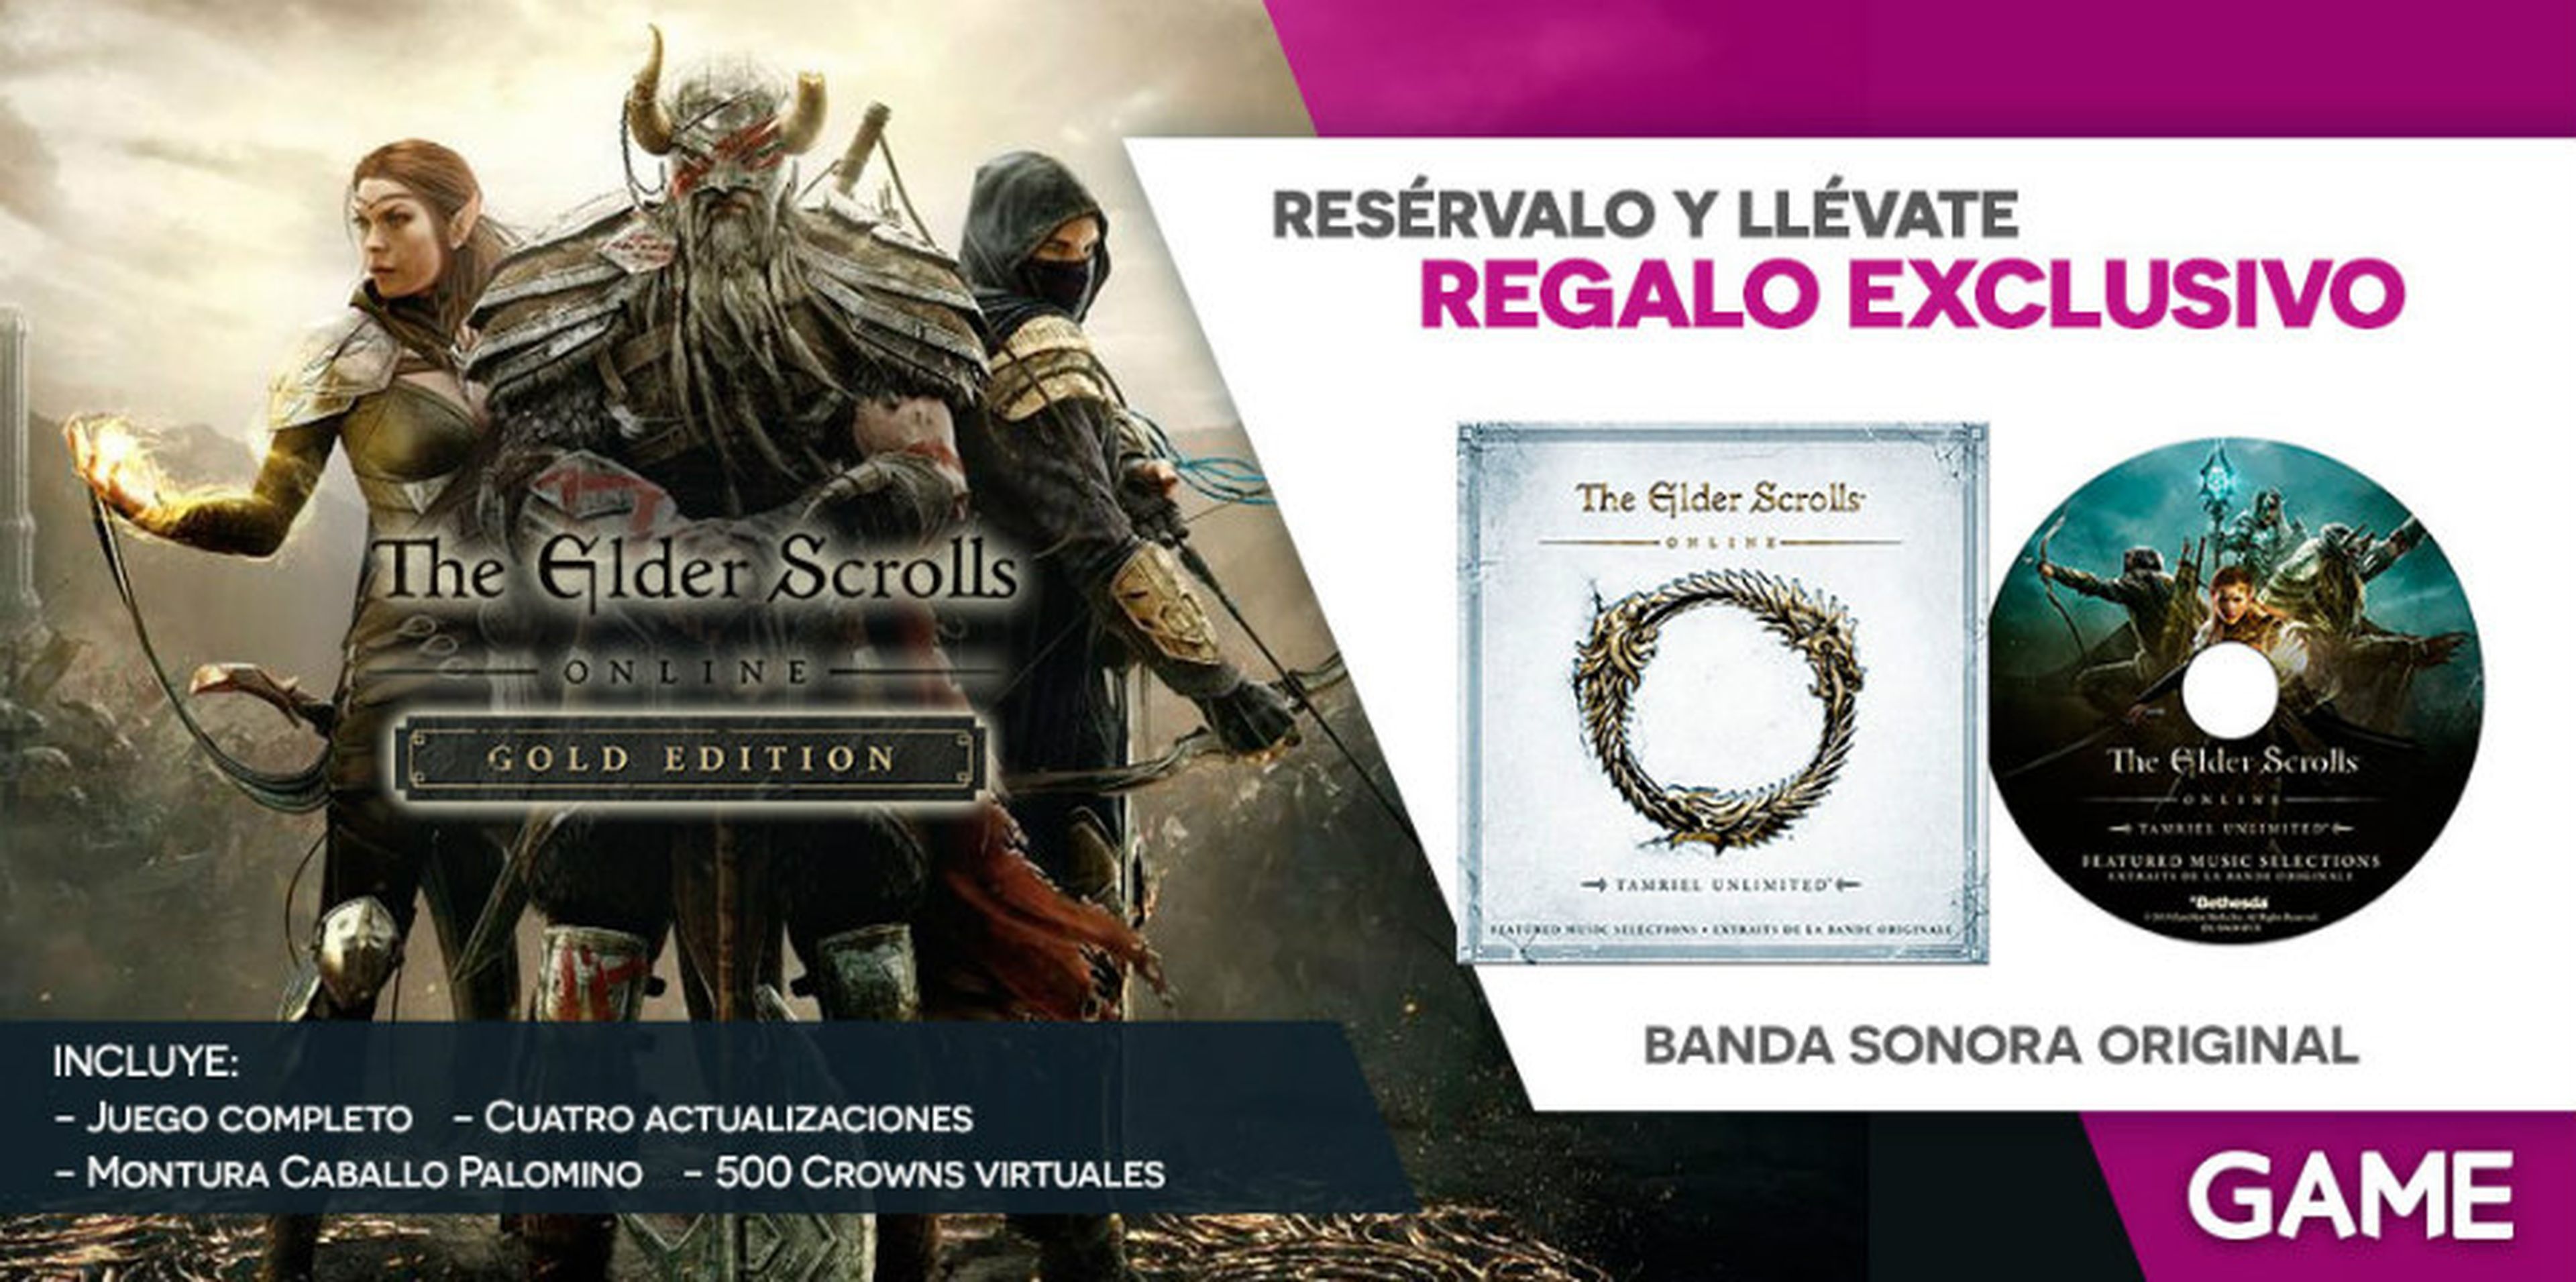 The Elder Scrolls Online Gold Edition GAME